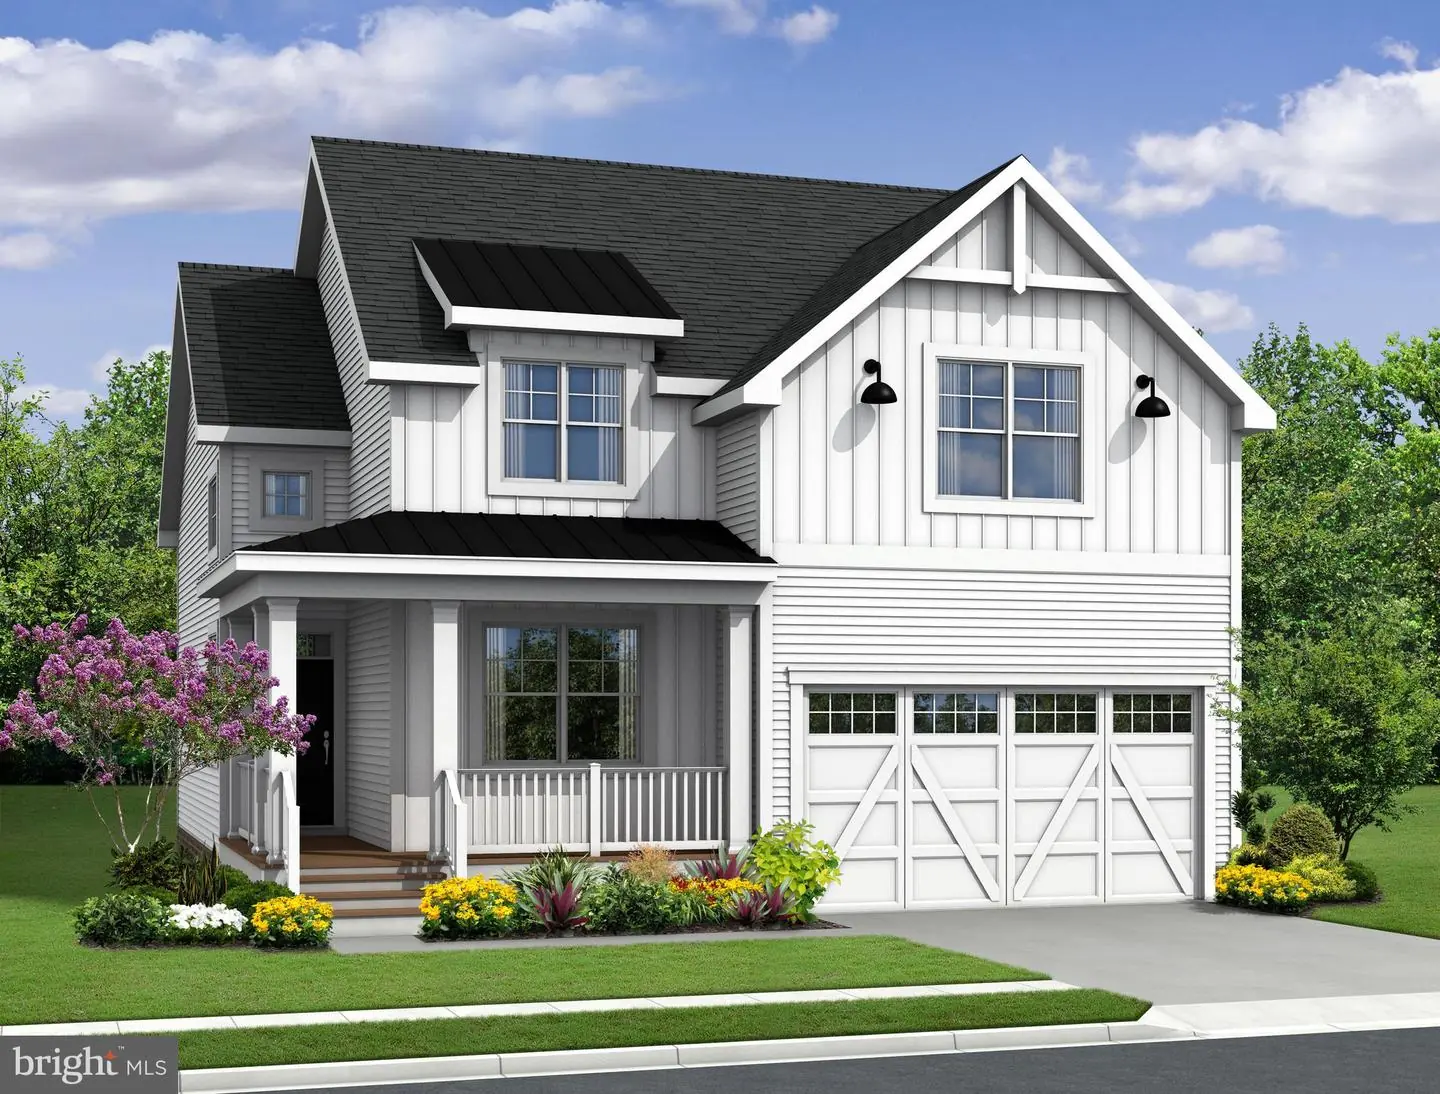 DESU2031440-801988062300-2022-11-02-11-01-29 Iris To-be-built Home Tbd | Millsboro, DE Real Estate For Sale | MLS# Desu2031440  - David T. King Realtor